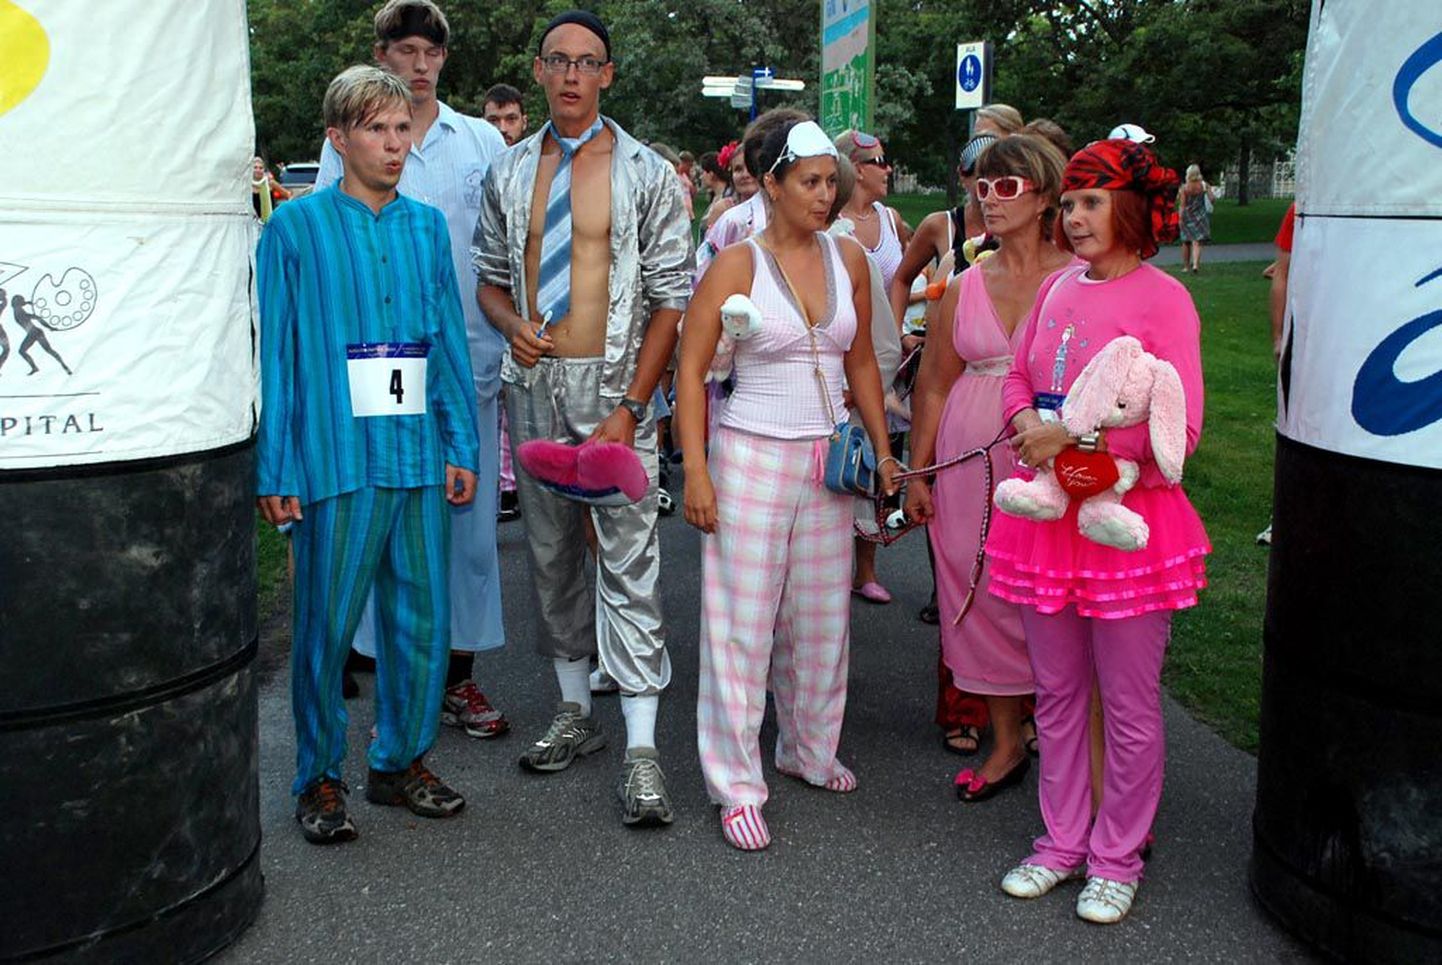 Festivali “Augustiunetus” ööjooksu parim riietus on pidžaama.